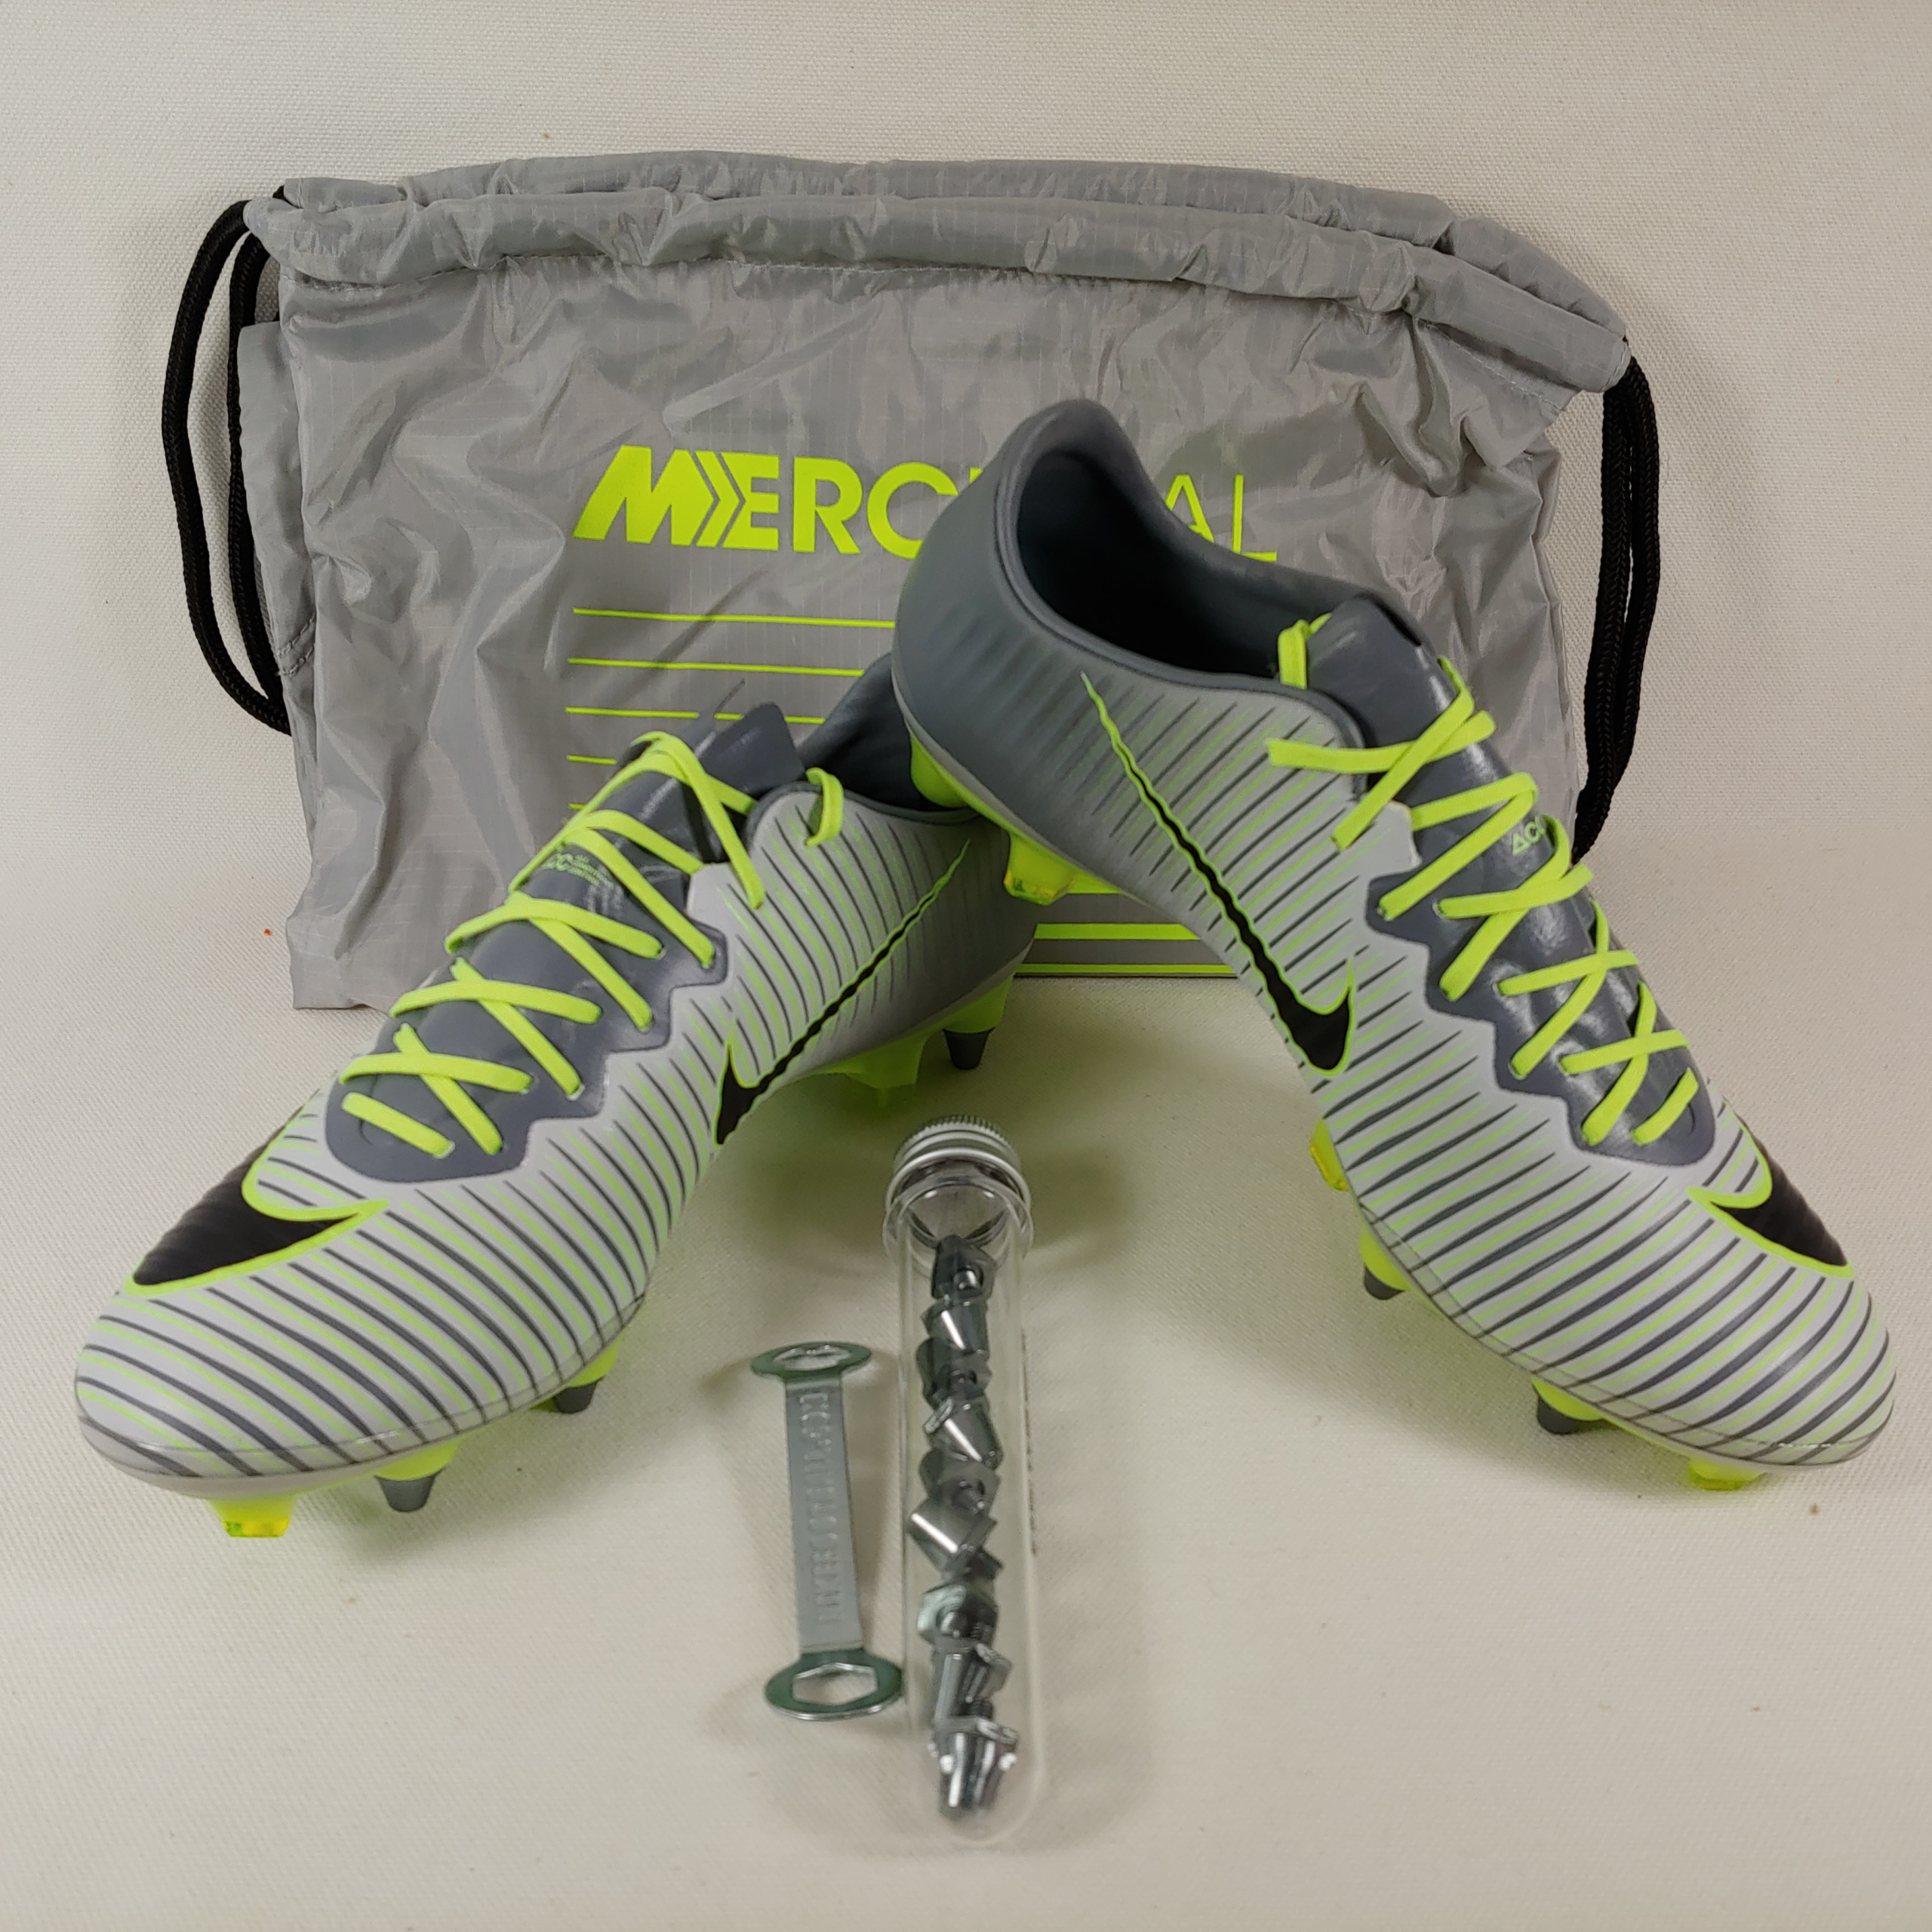 Vapor Césped 13 Mercurial Pro Ag Nike Fútbol Artificial Botas